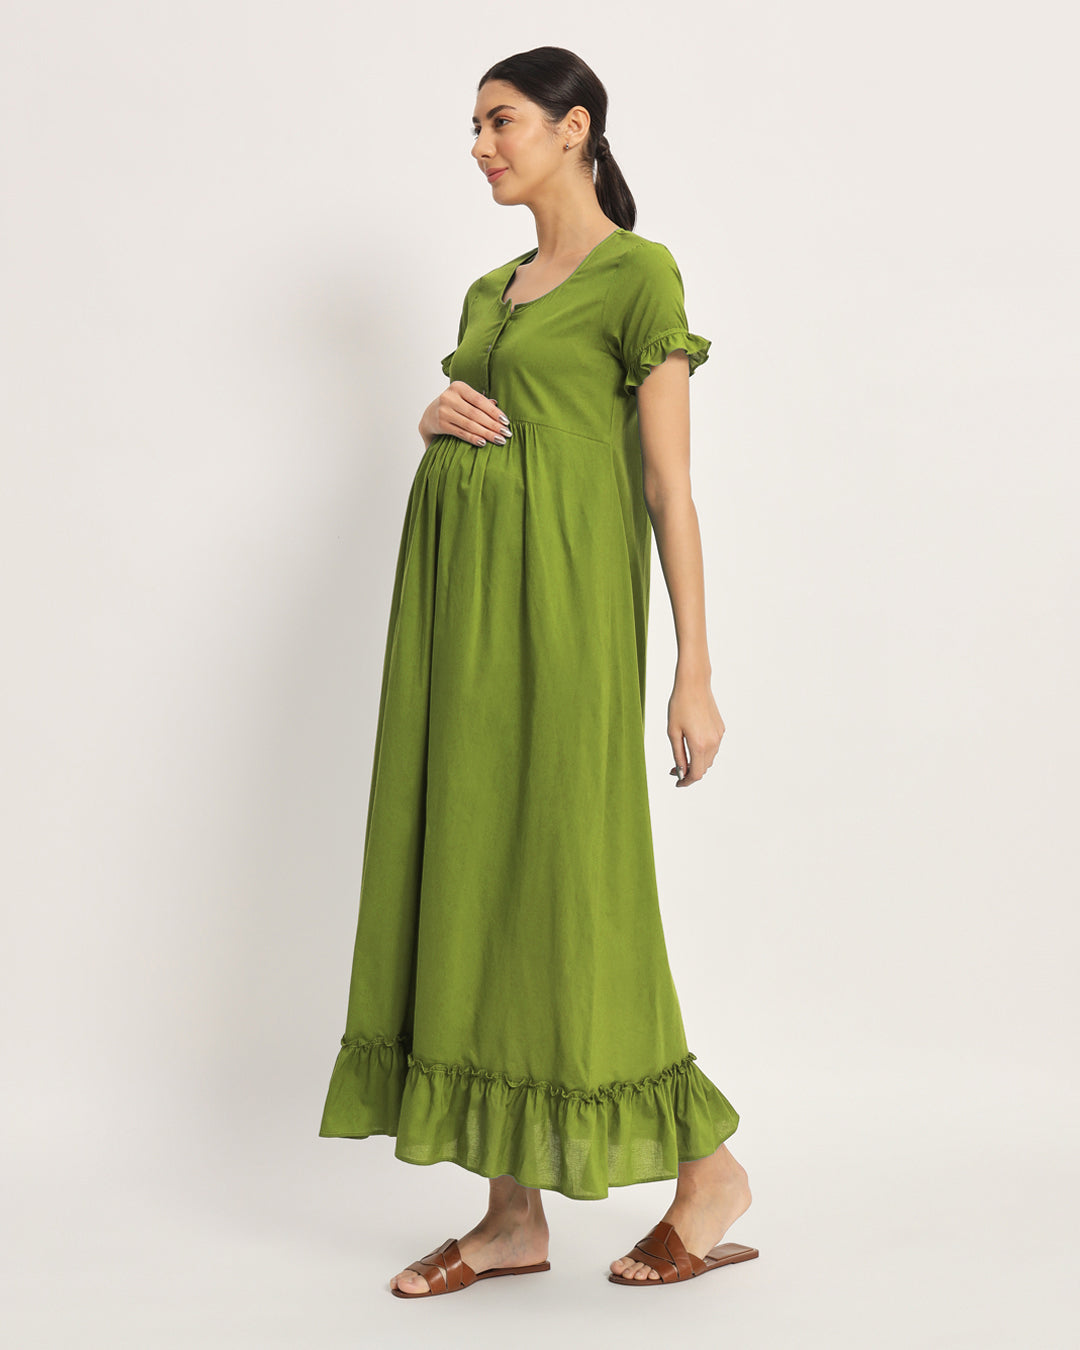 Combo: Plum Passion & Sage Green Bumpin' & Stylin' Maternity & Nursing Dress - Set of 2